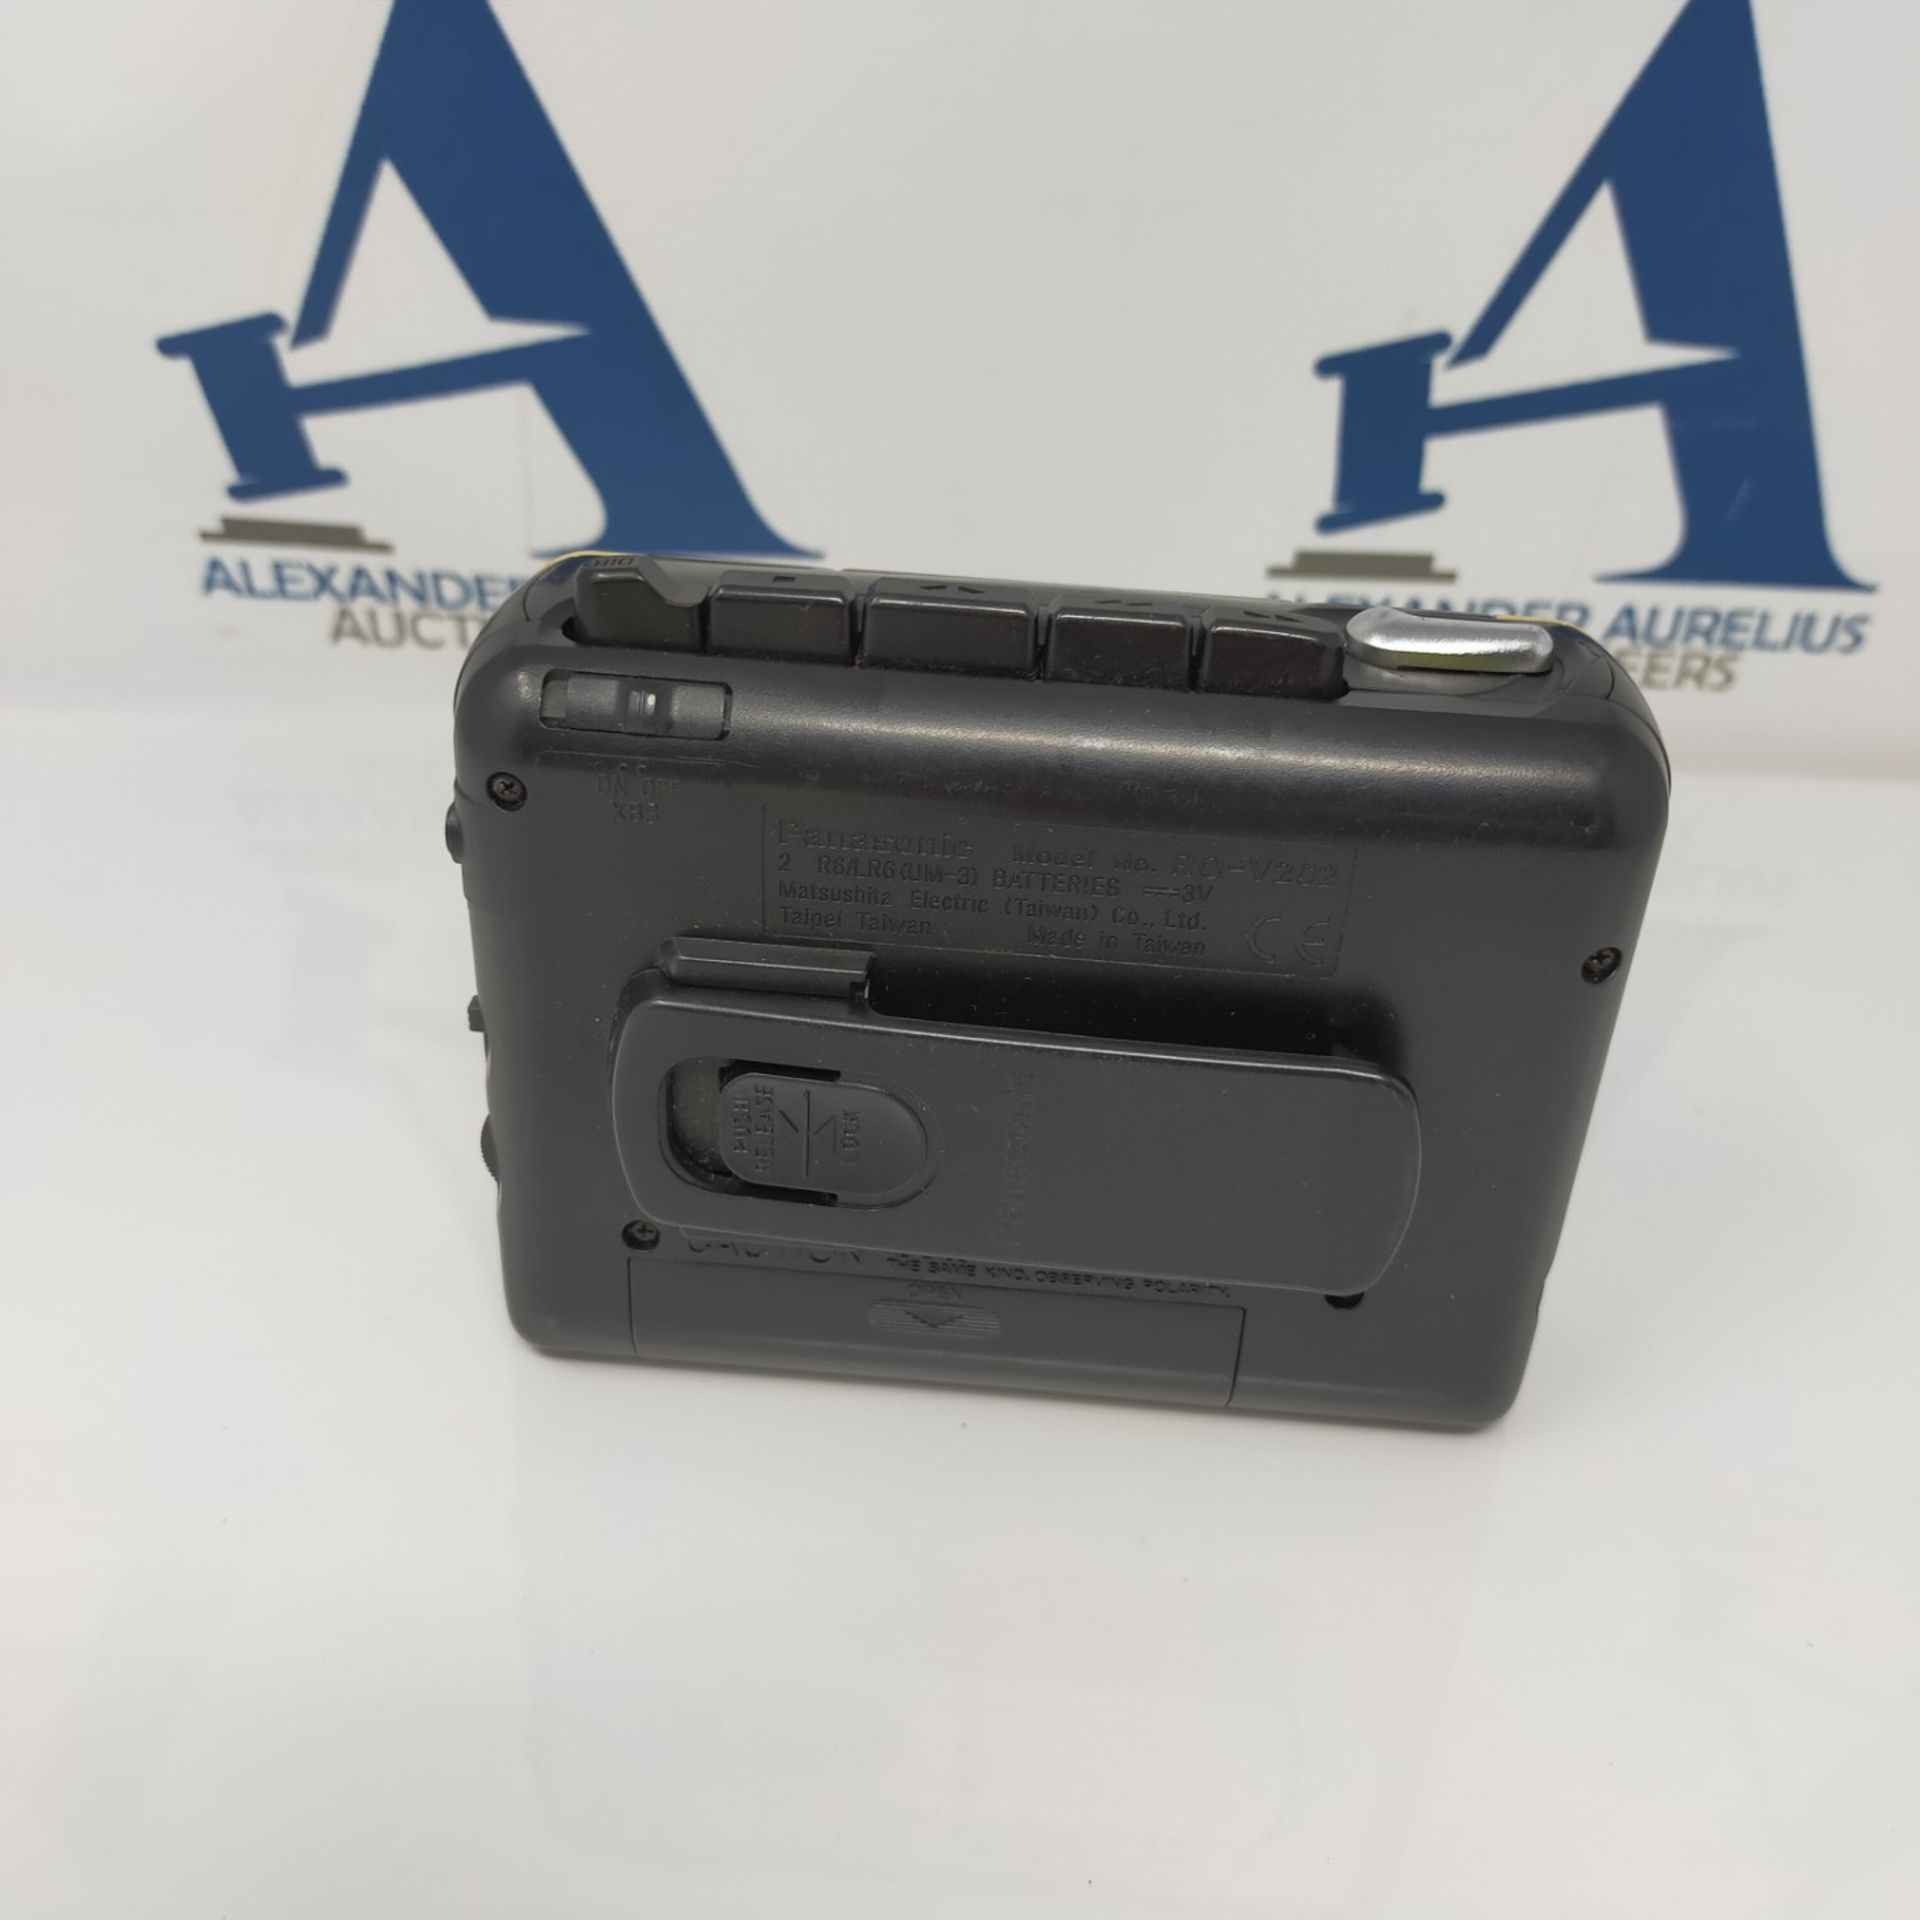 Panasonic RQ-V202 Silver Walkman Stereo Cassette Player AM FM Radio - Image 2 of 2